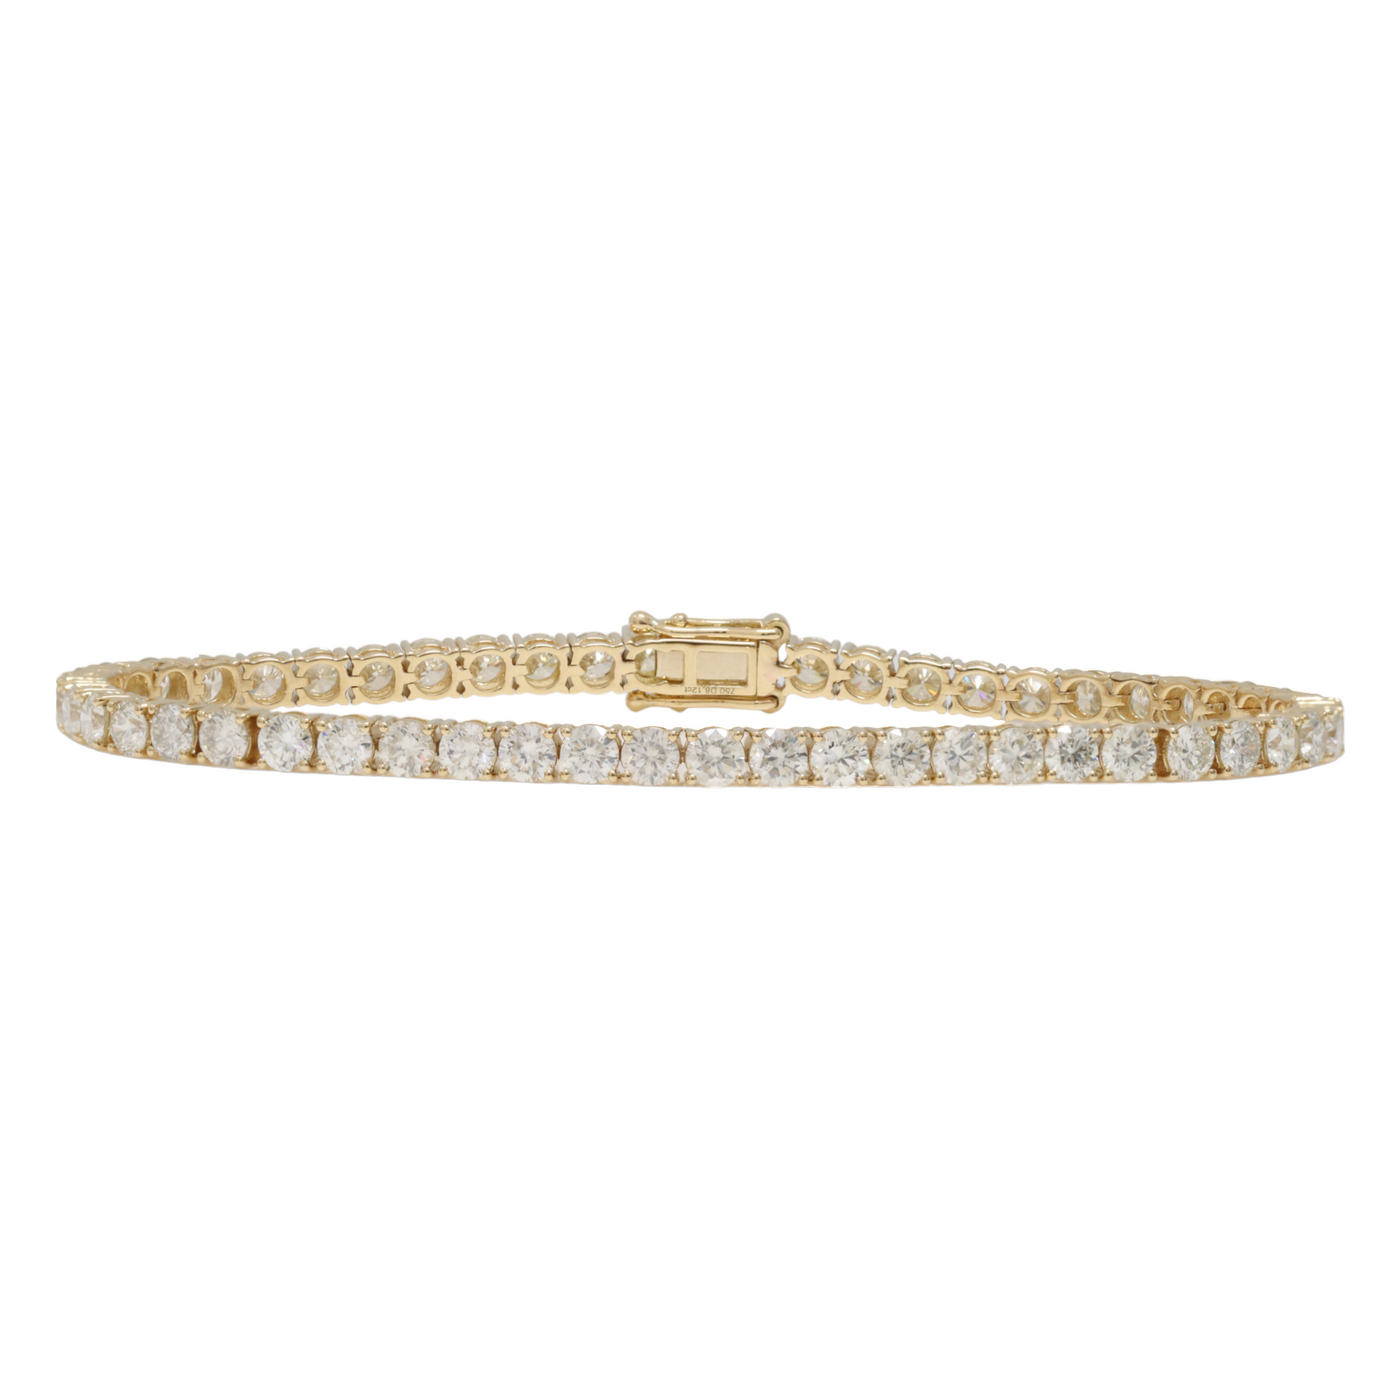 8.12ct YG Diamond tennis bracelet in 18ct